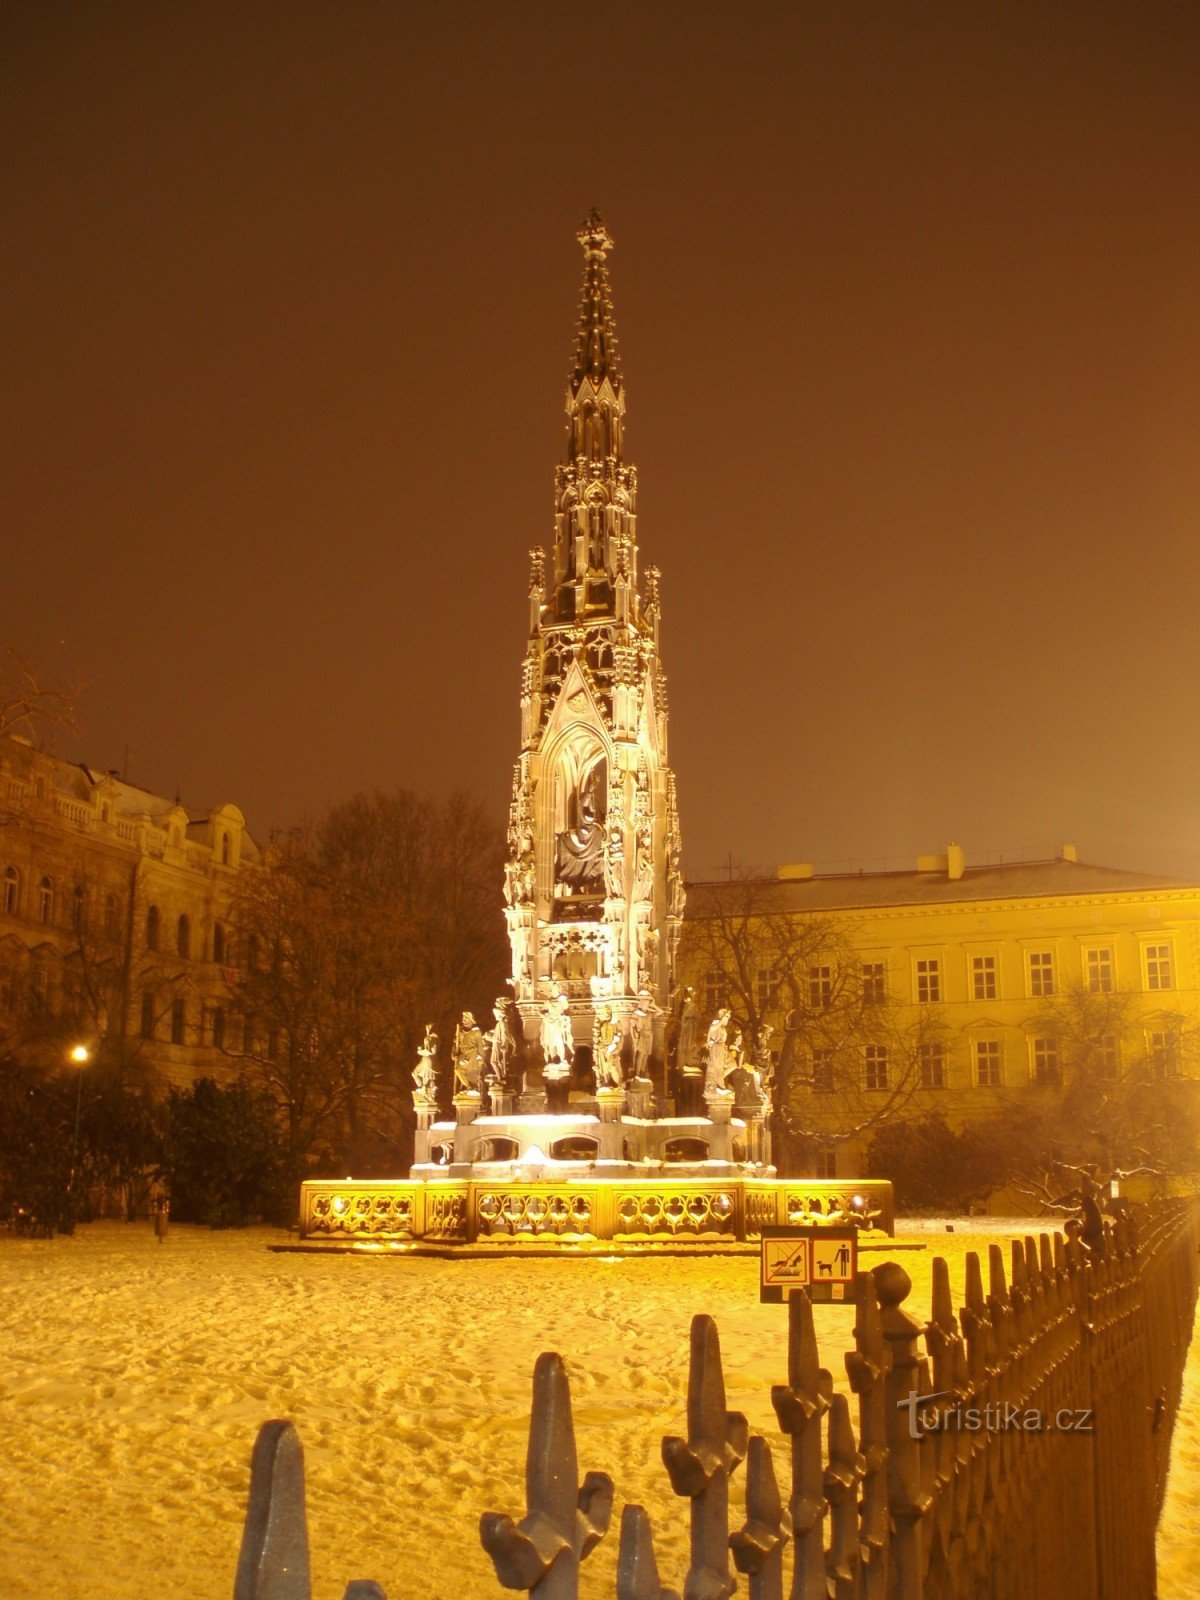 Kraner's Fountain